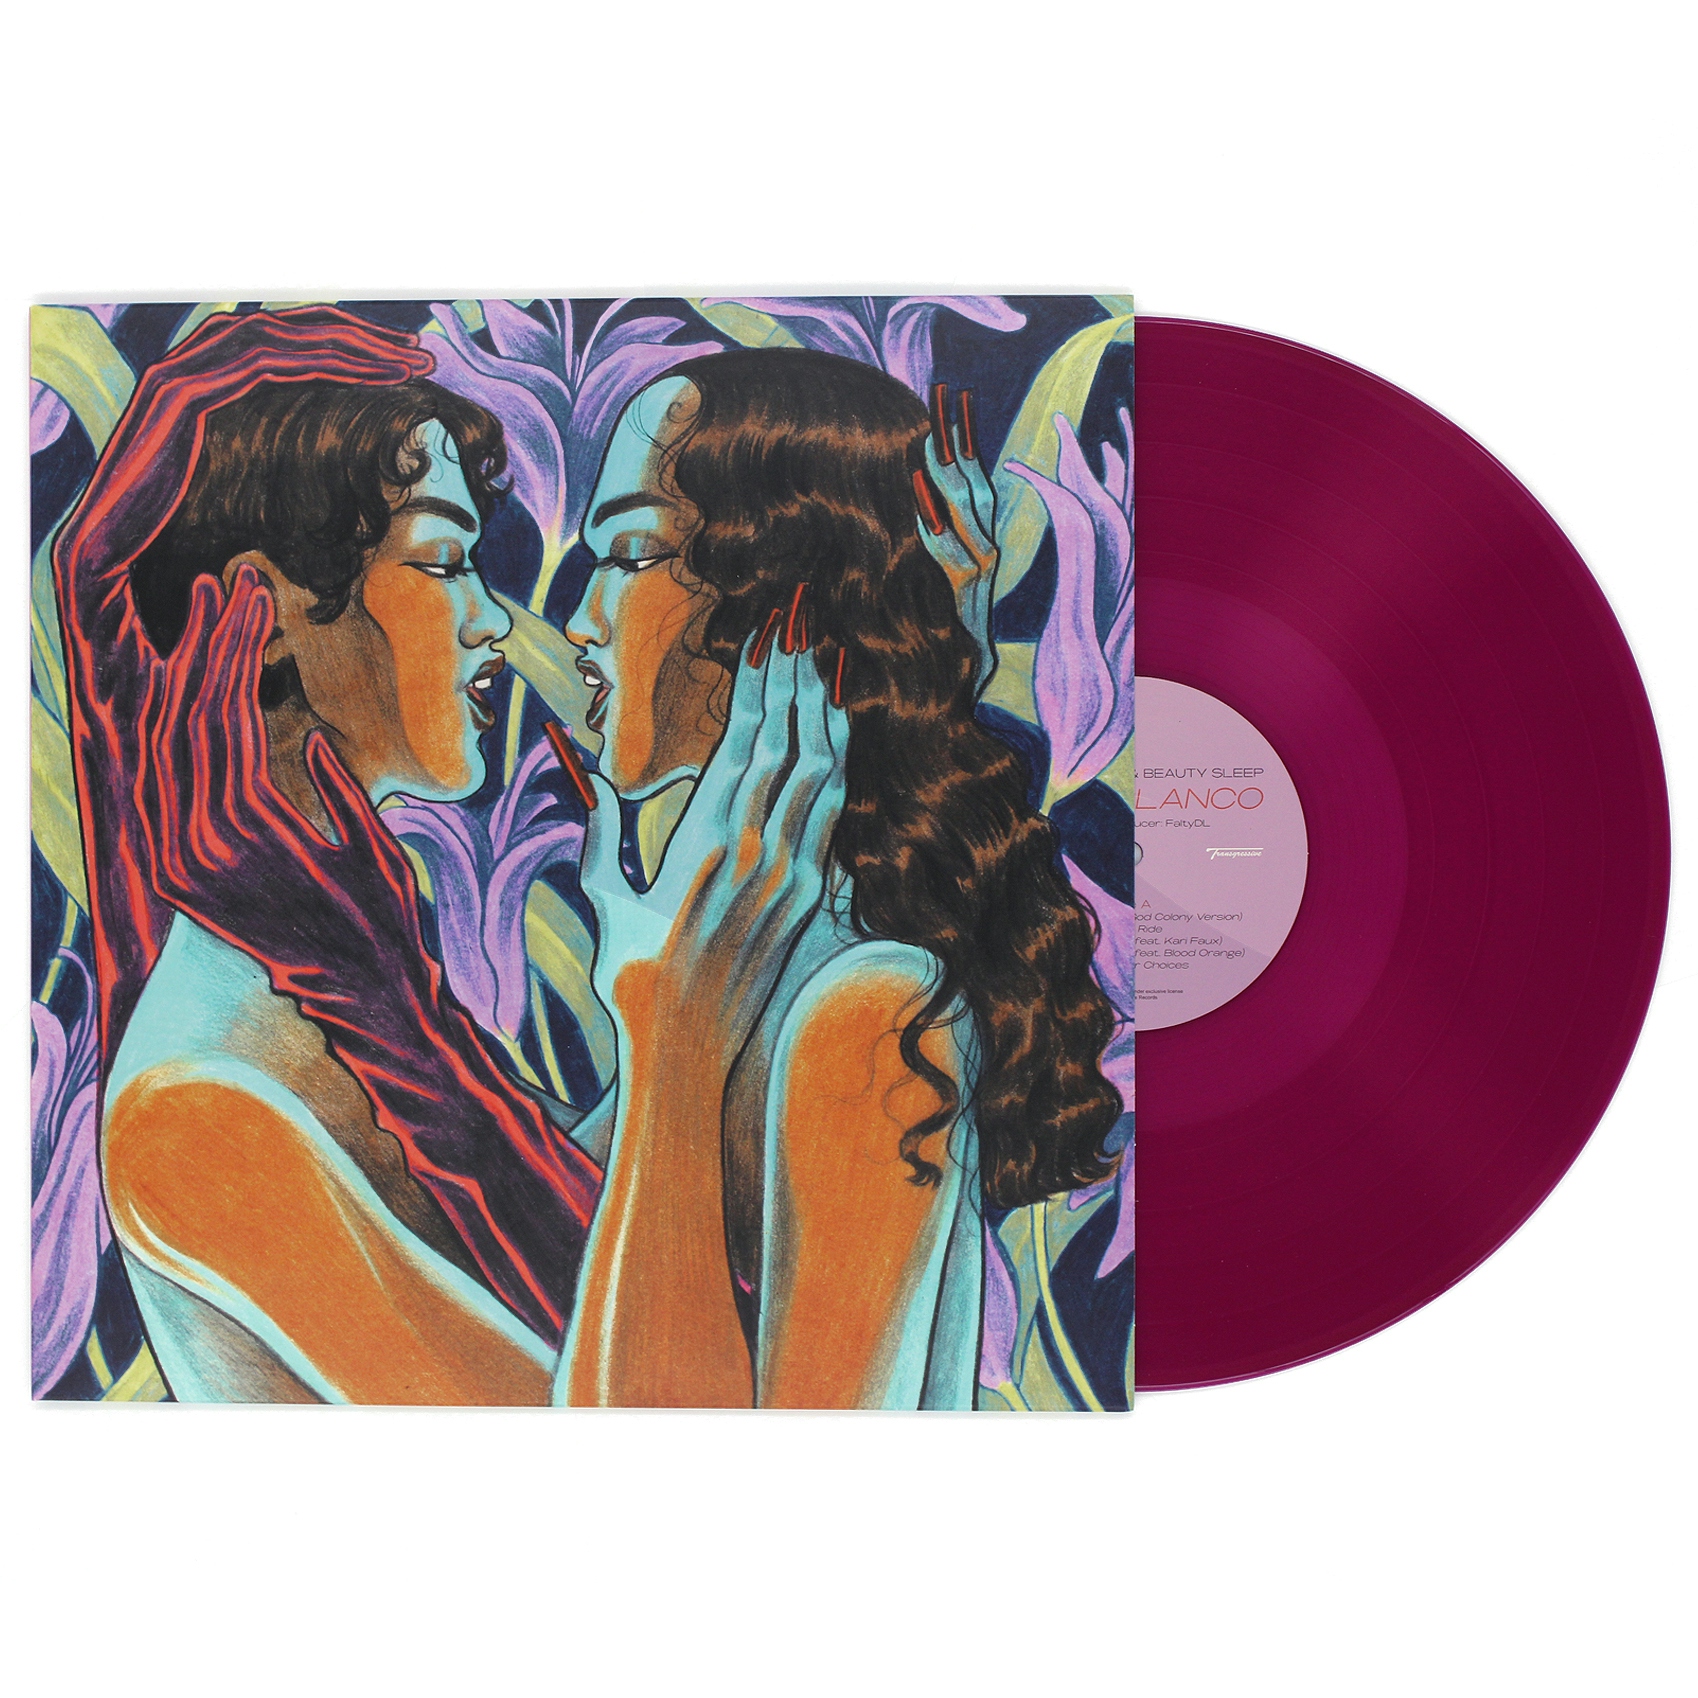 Album artwork for Album artwork for Broken Hearts and Beauty Sleep by Mykki Blanco by Broken Hearts and Beauty Sleep - Mykki Blanco